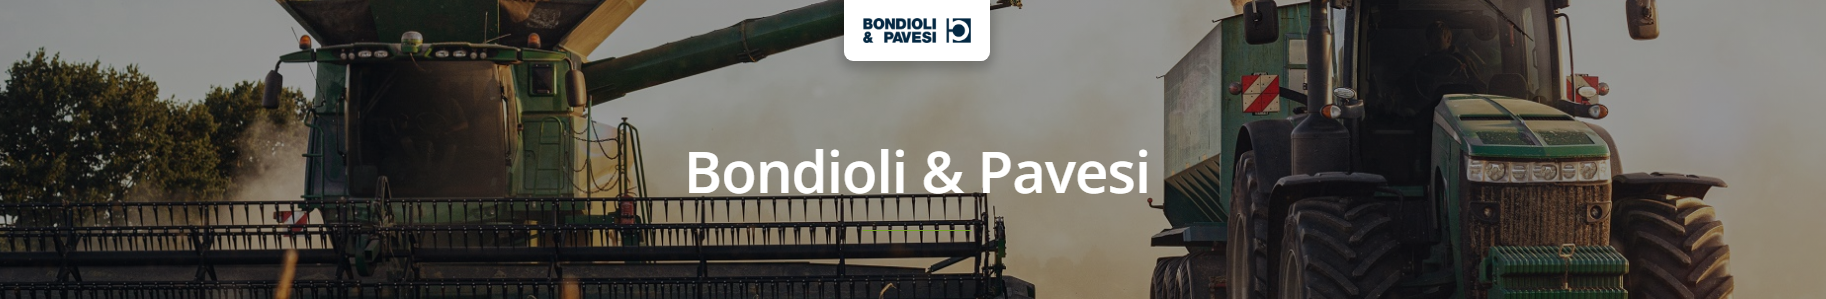 Bondioli & Pavesi Pumps